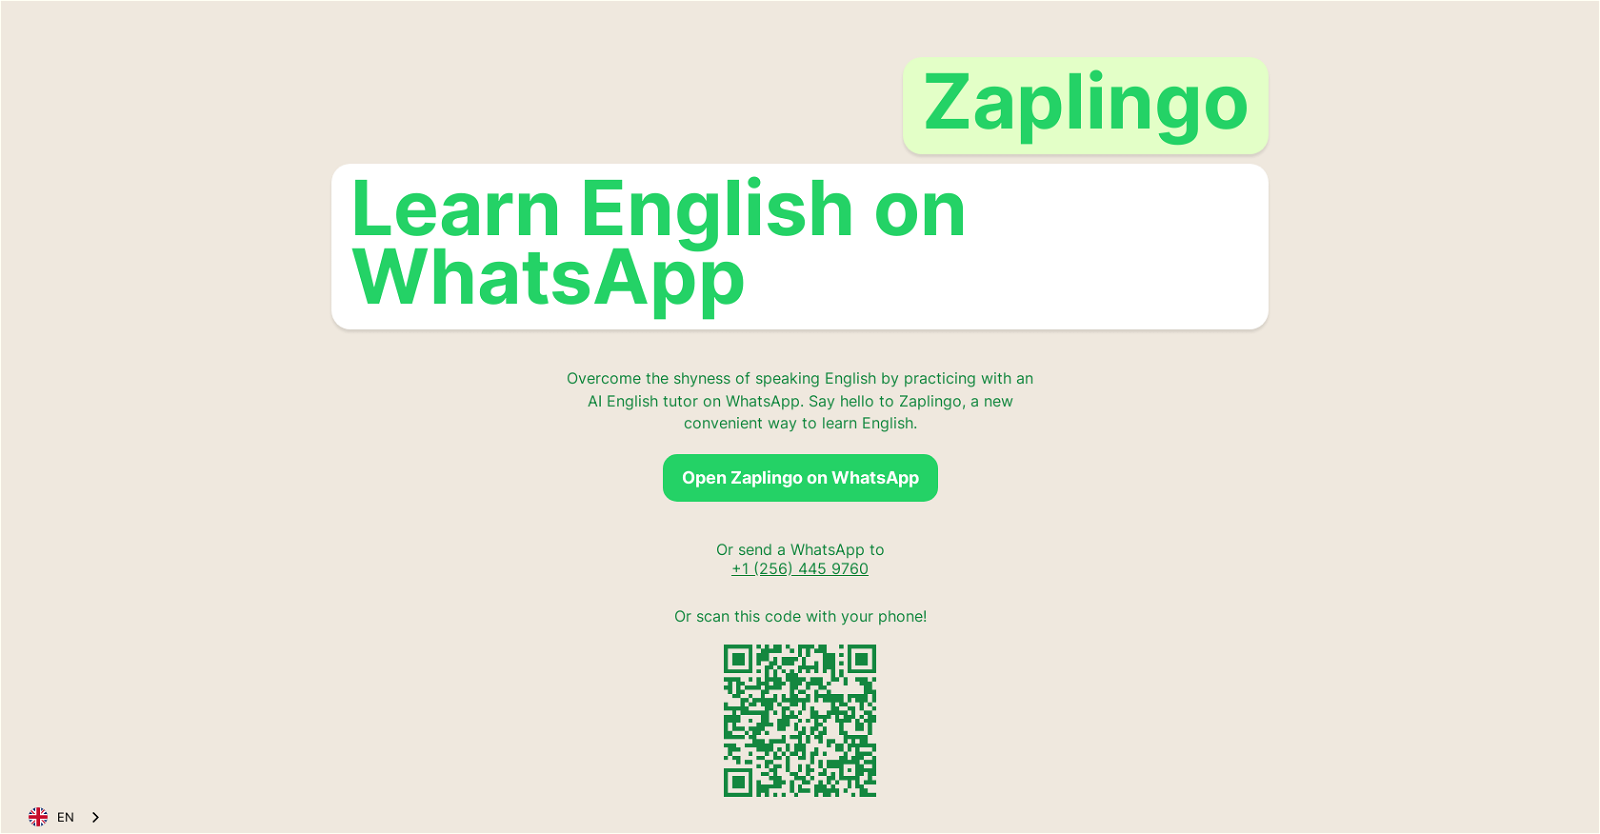 Zaplingo website